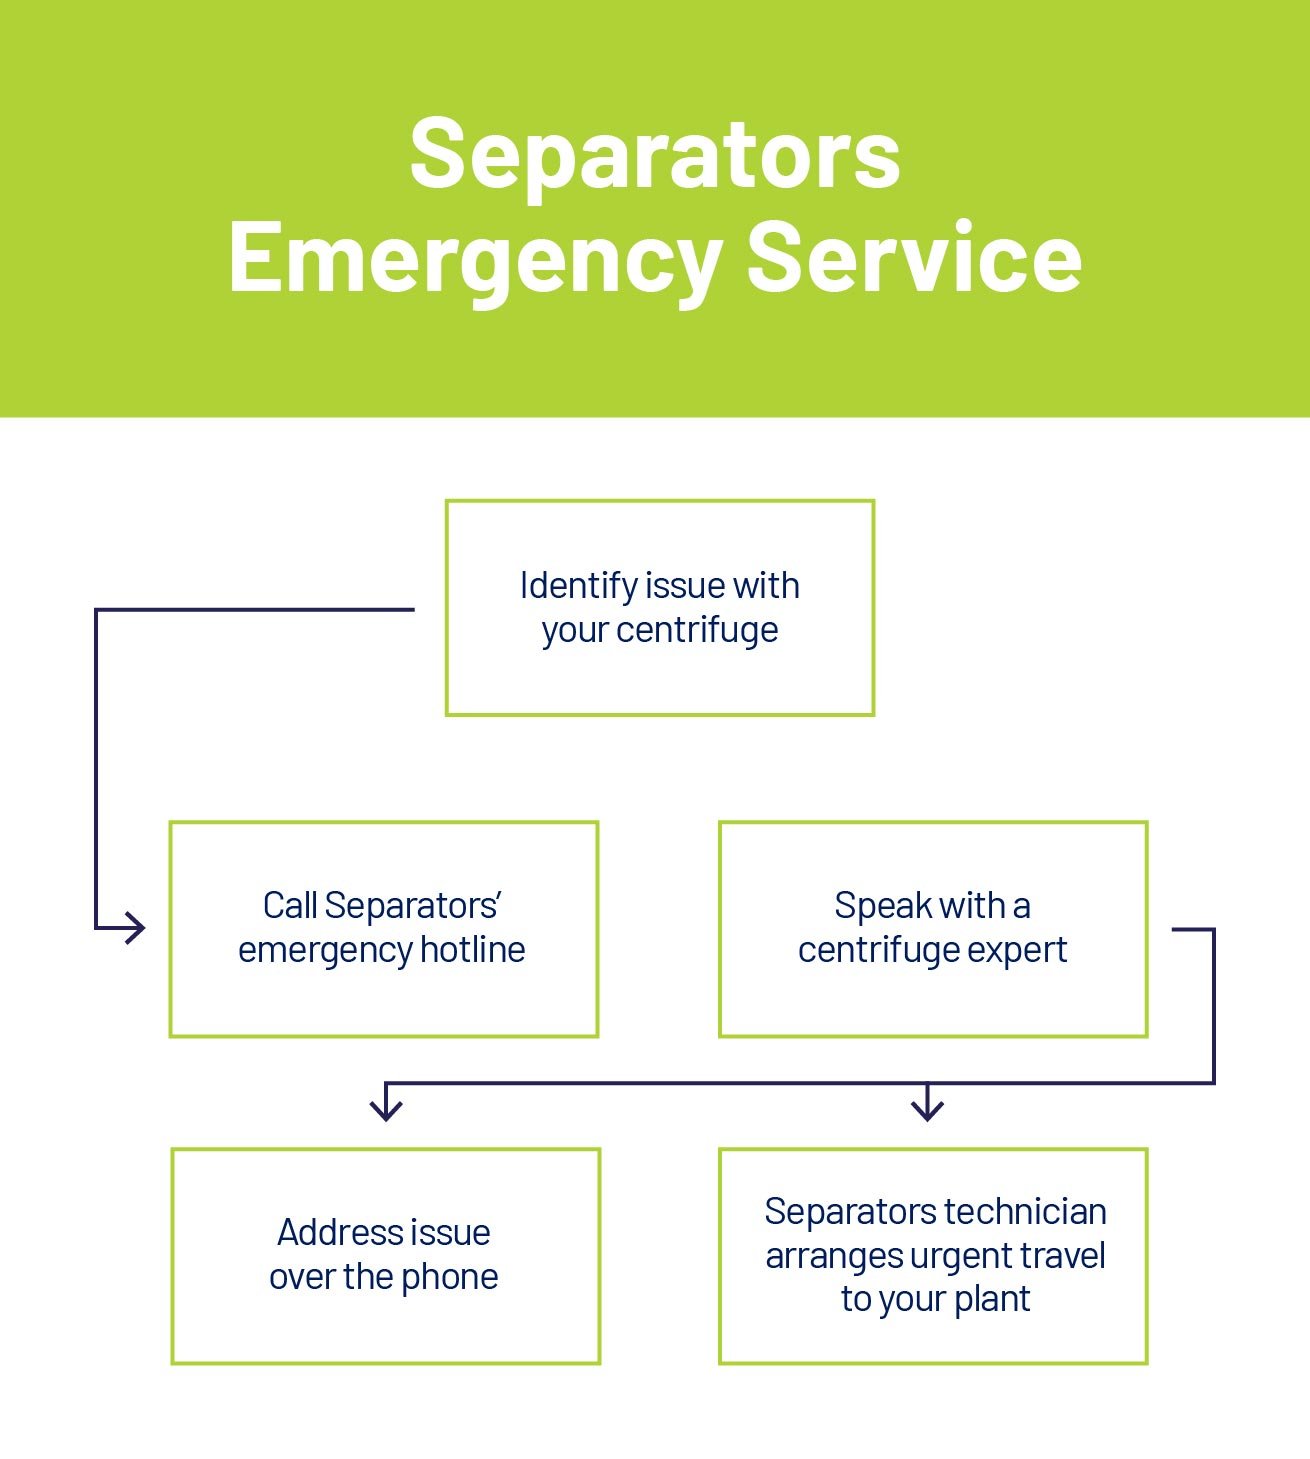 Separators emergency service flow chart timeline